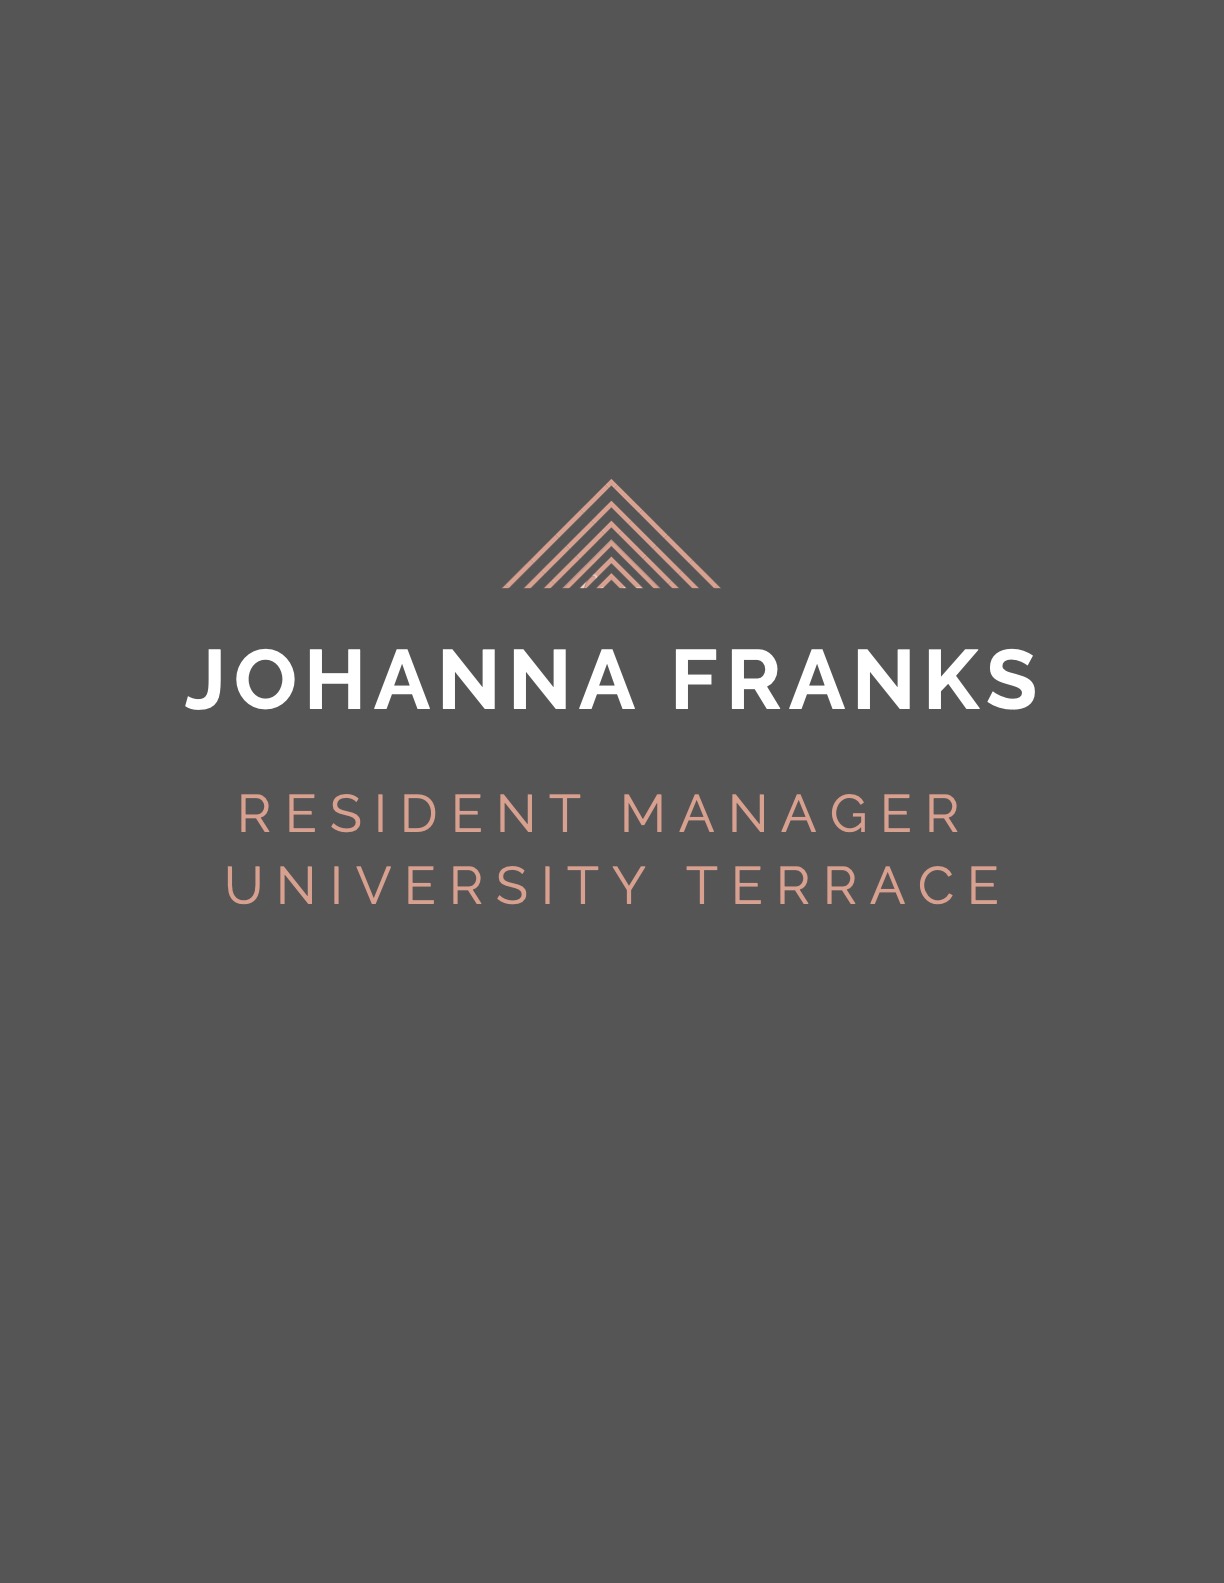 Johanna Franks